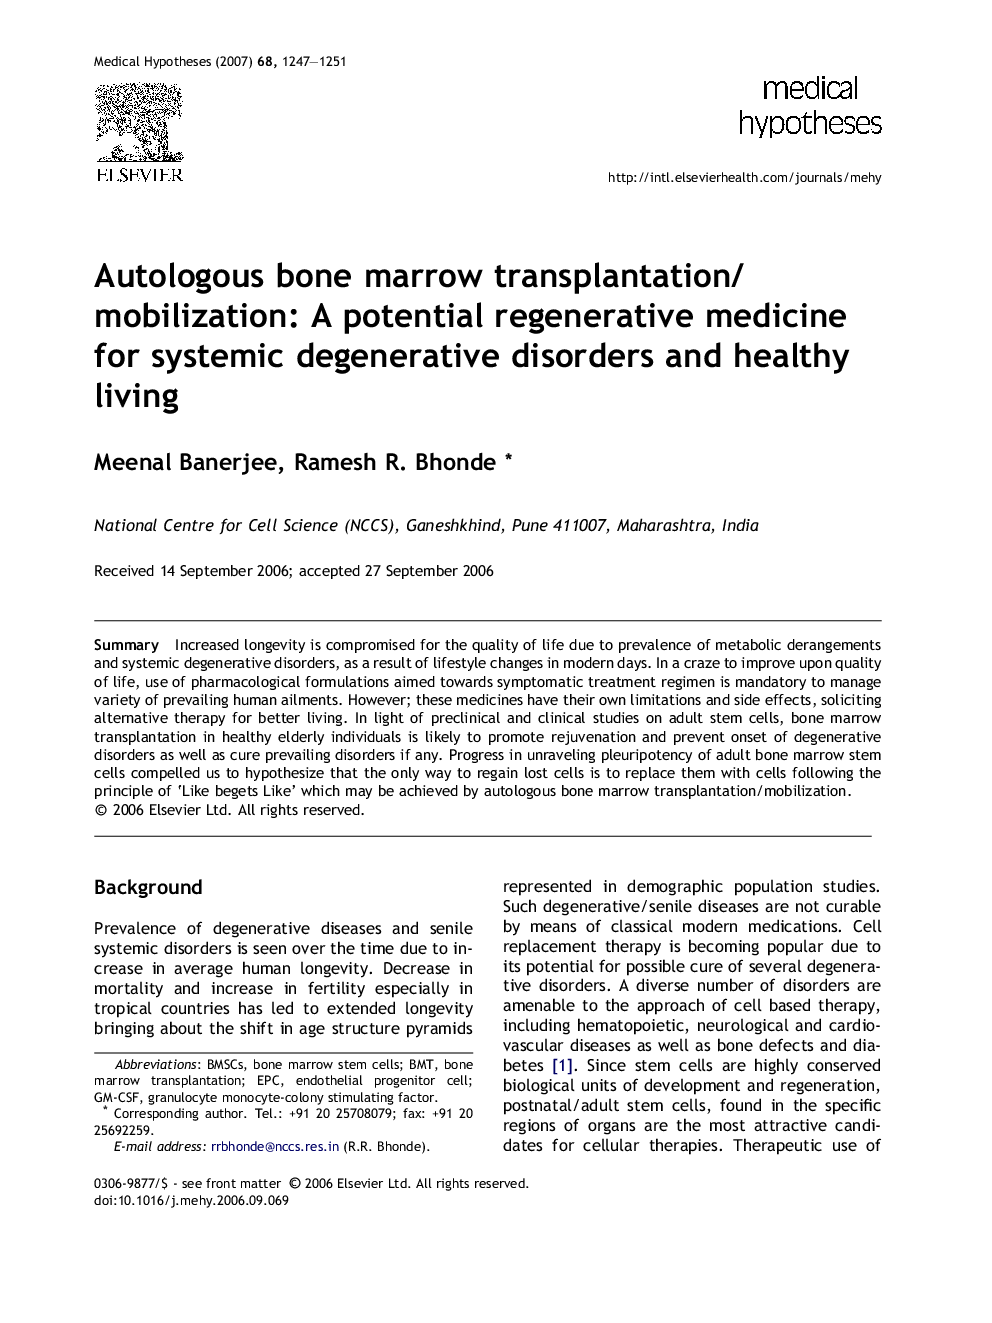 Autologous bone marrow transplantation/mobilization: A potential regenerative medicine for systemic degenerative disorders and healthy living